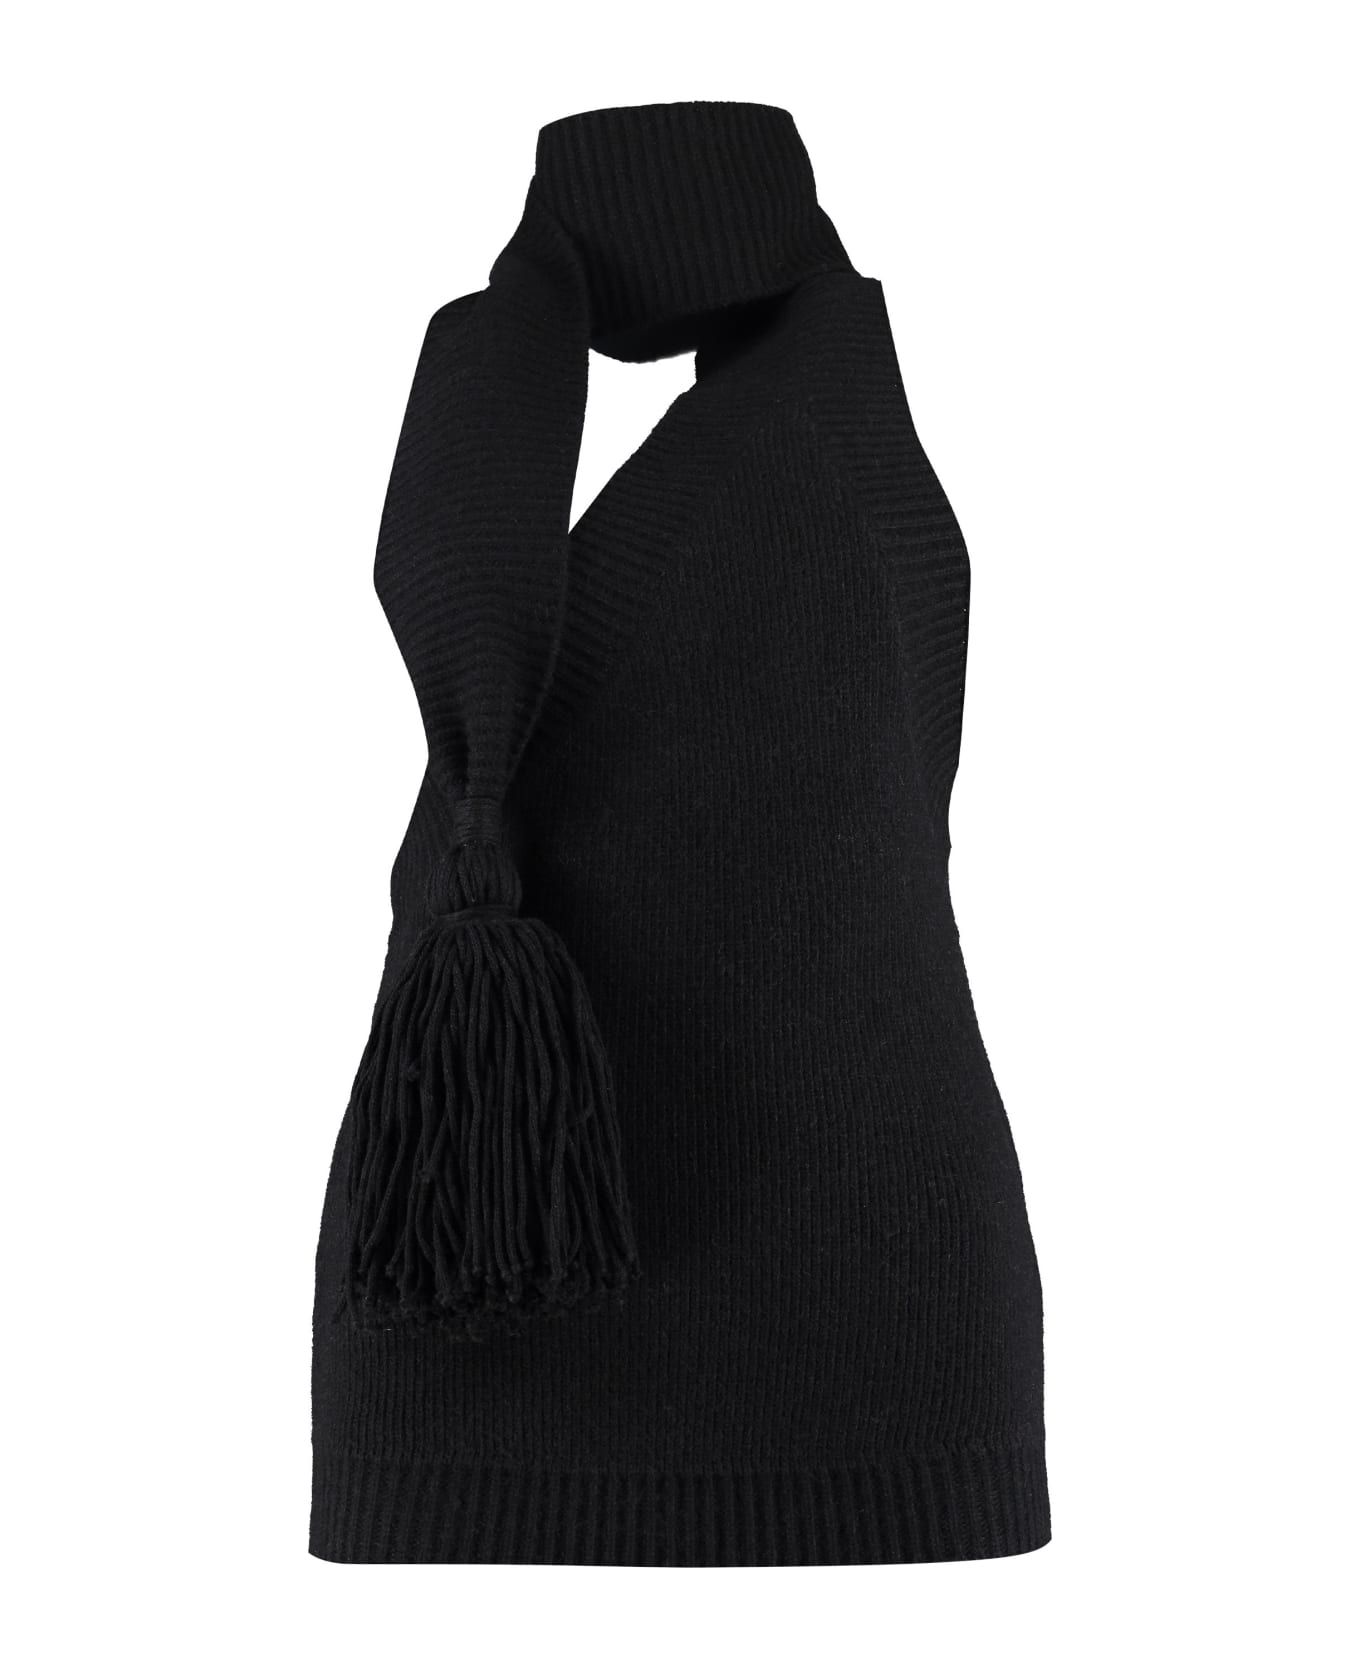 Bottega Veneta Knitted One-shoulder Top - black